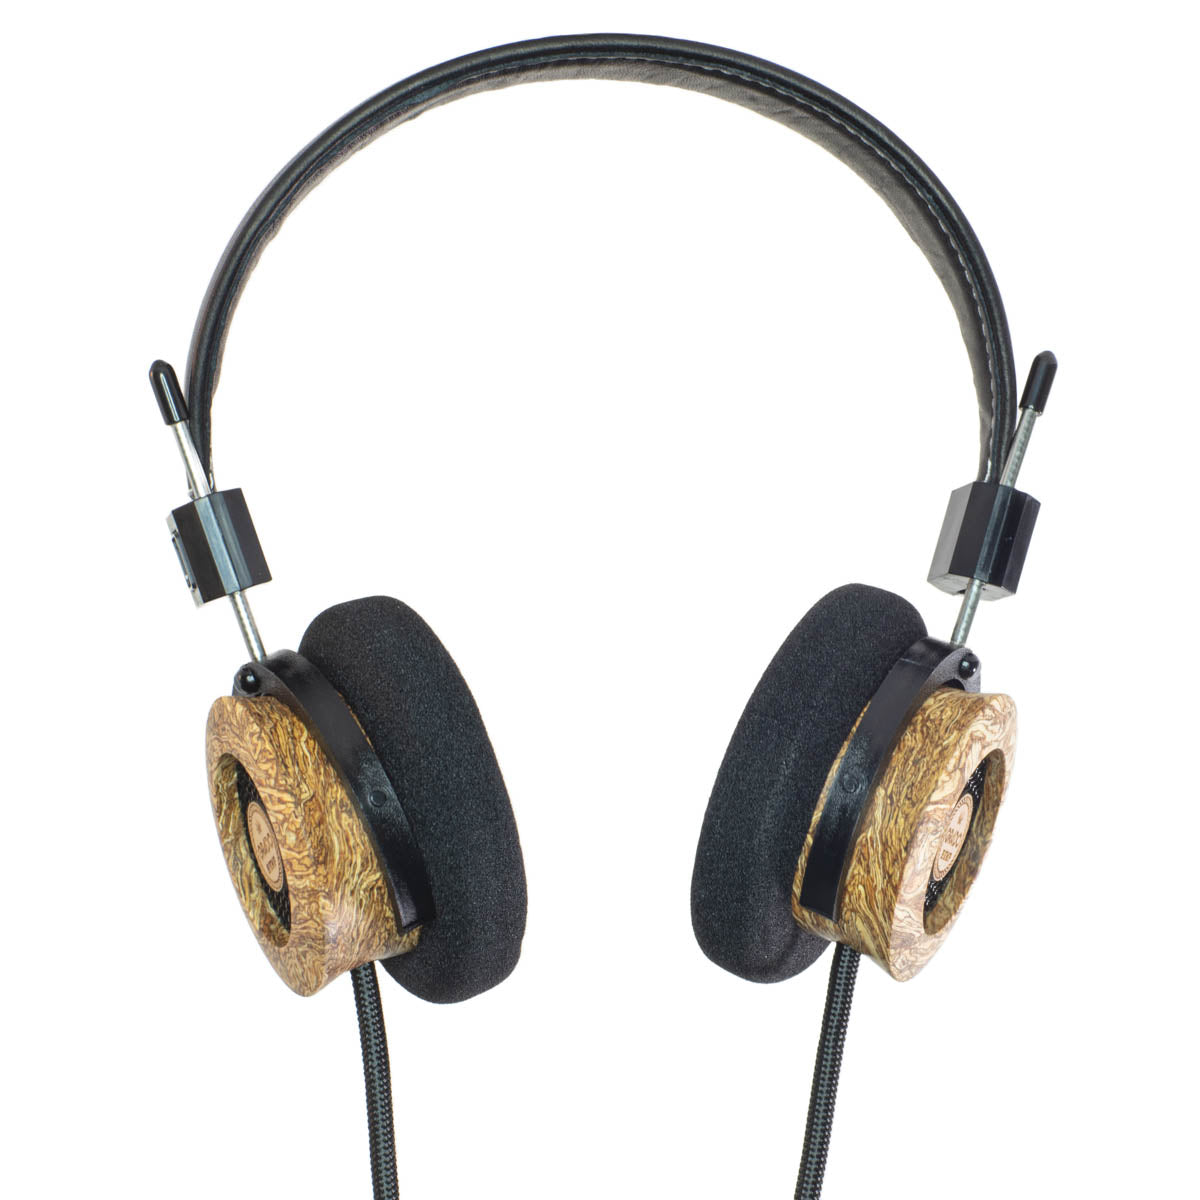 Grado Hemp headphones